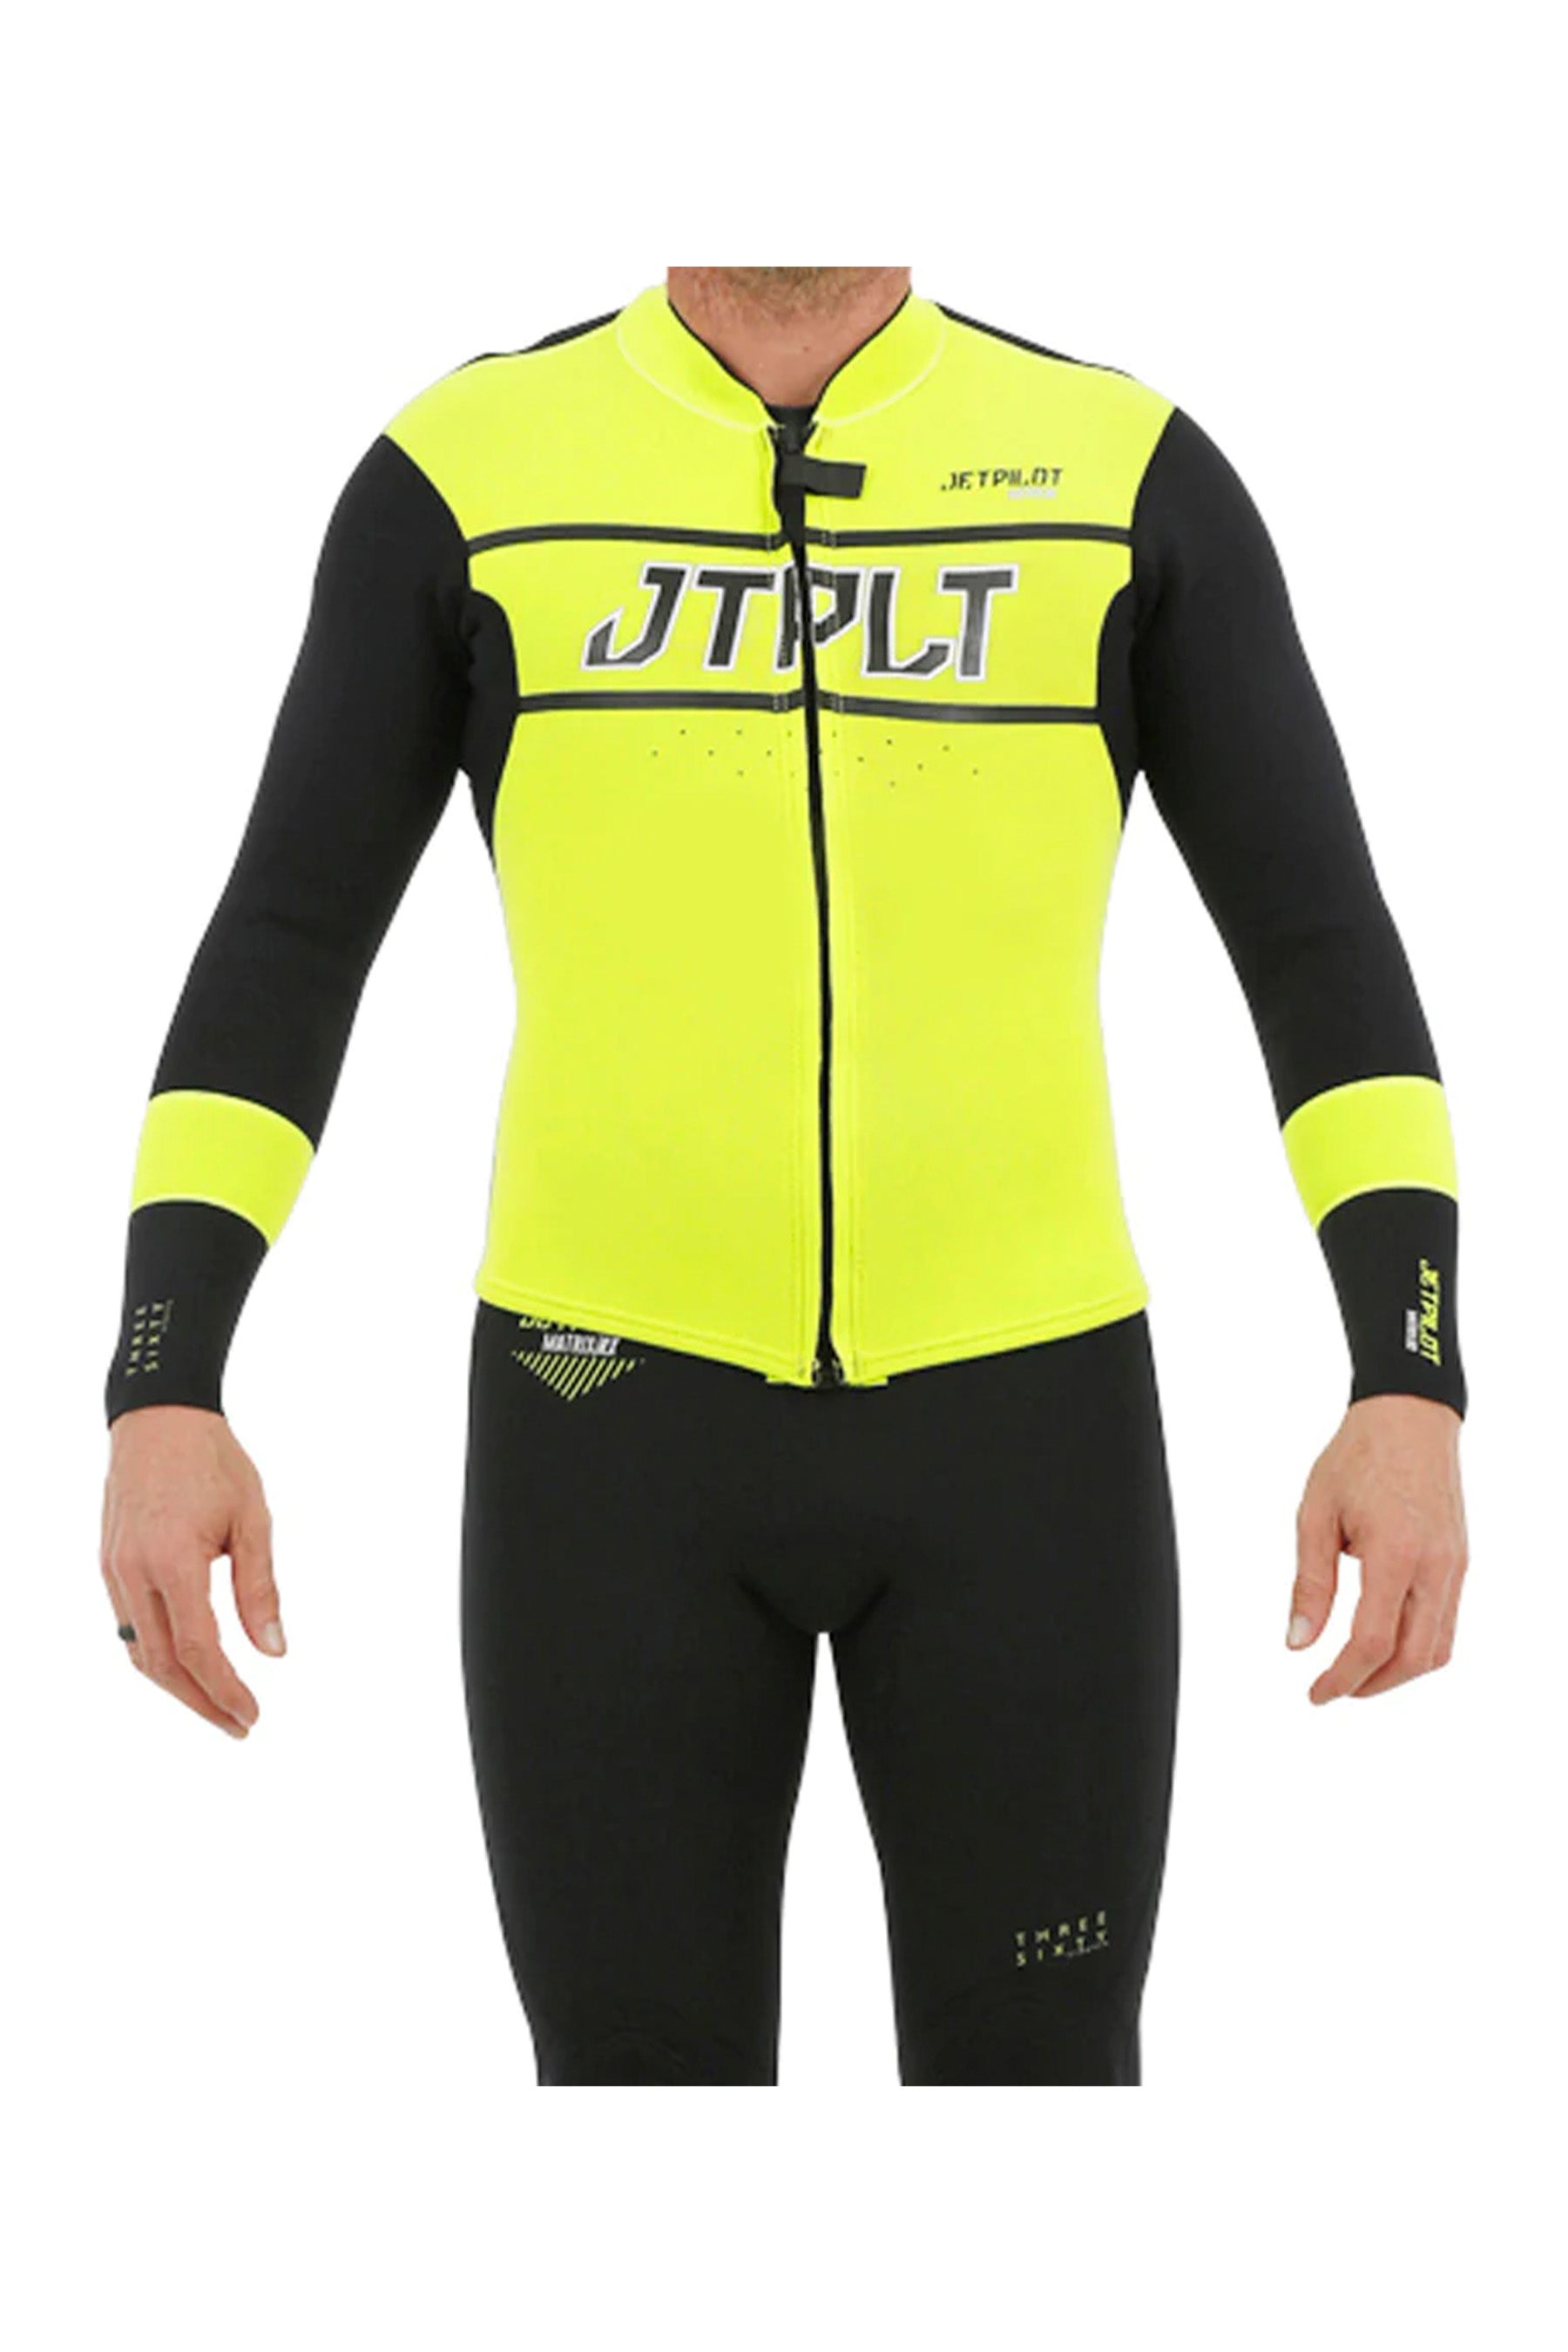 Jetpilot Rx Mens Race Jacket - Yellow/Black